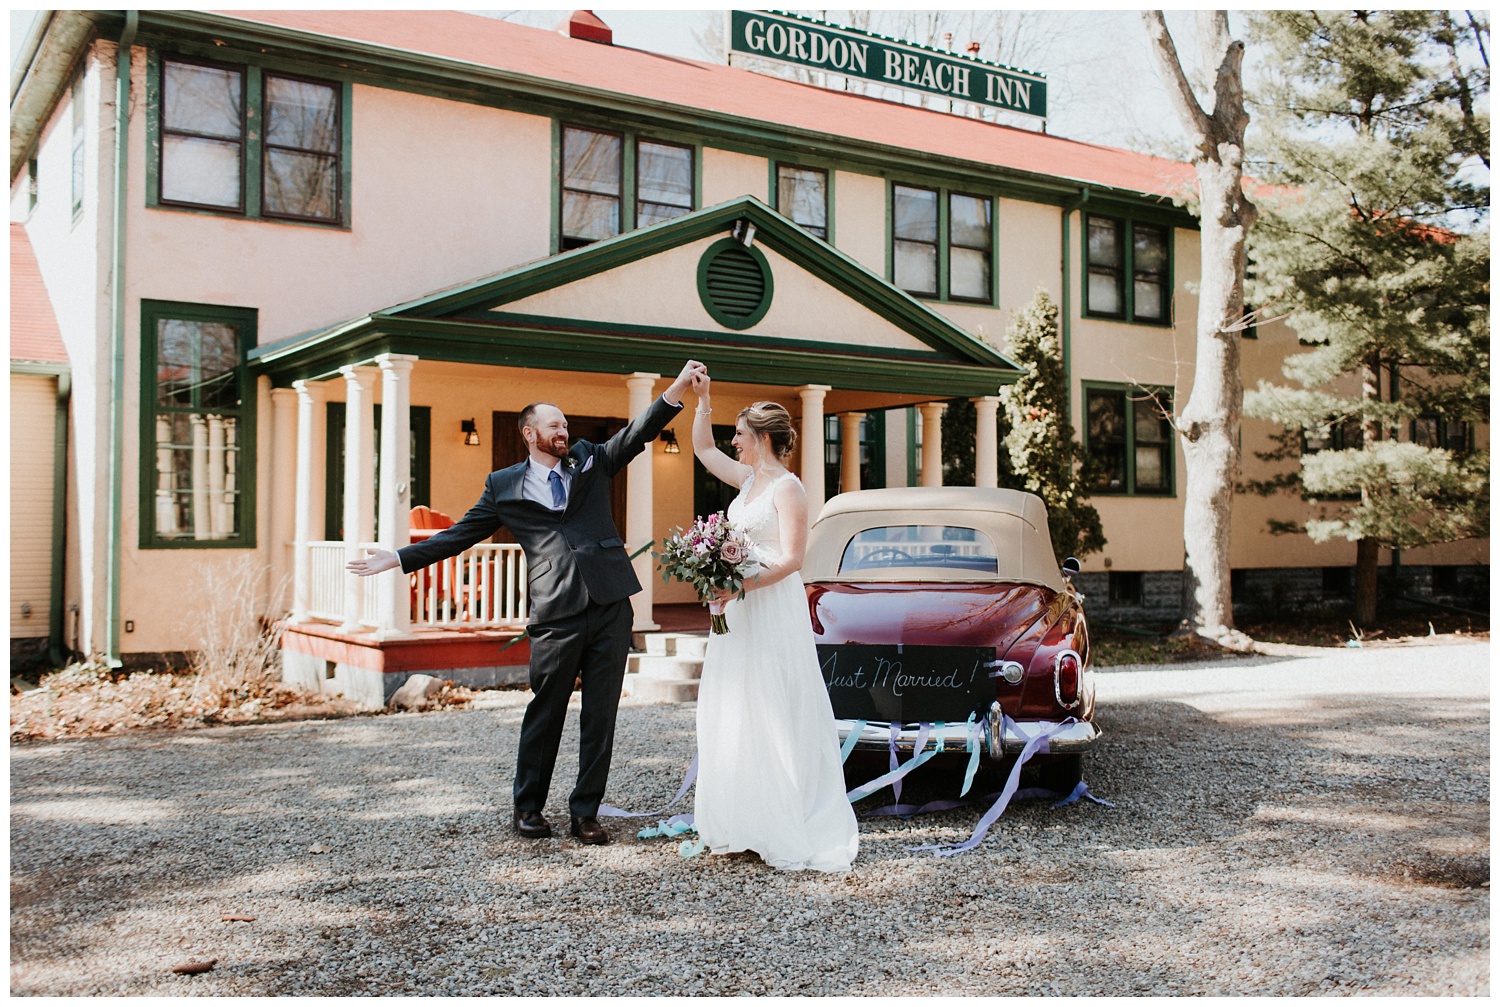 Gordon Beach Inn New Buffalo Wedding Photography54.jpg